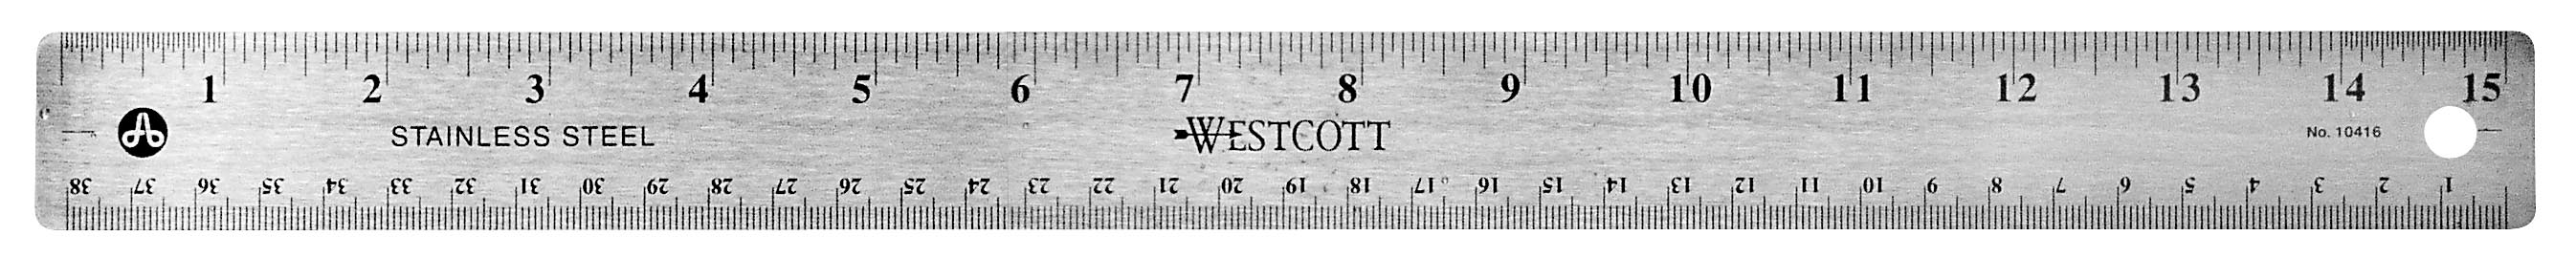 Westcott 15" Stainless Steel Office Ruler With Non Slip Cork Base (10416)